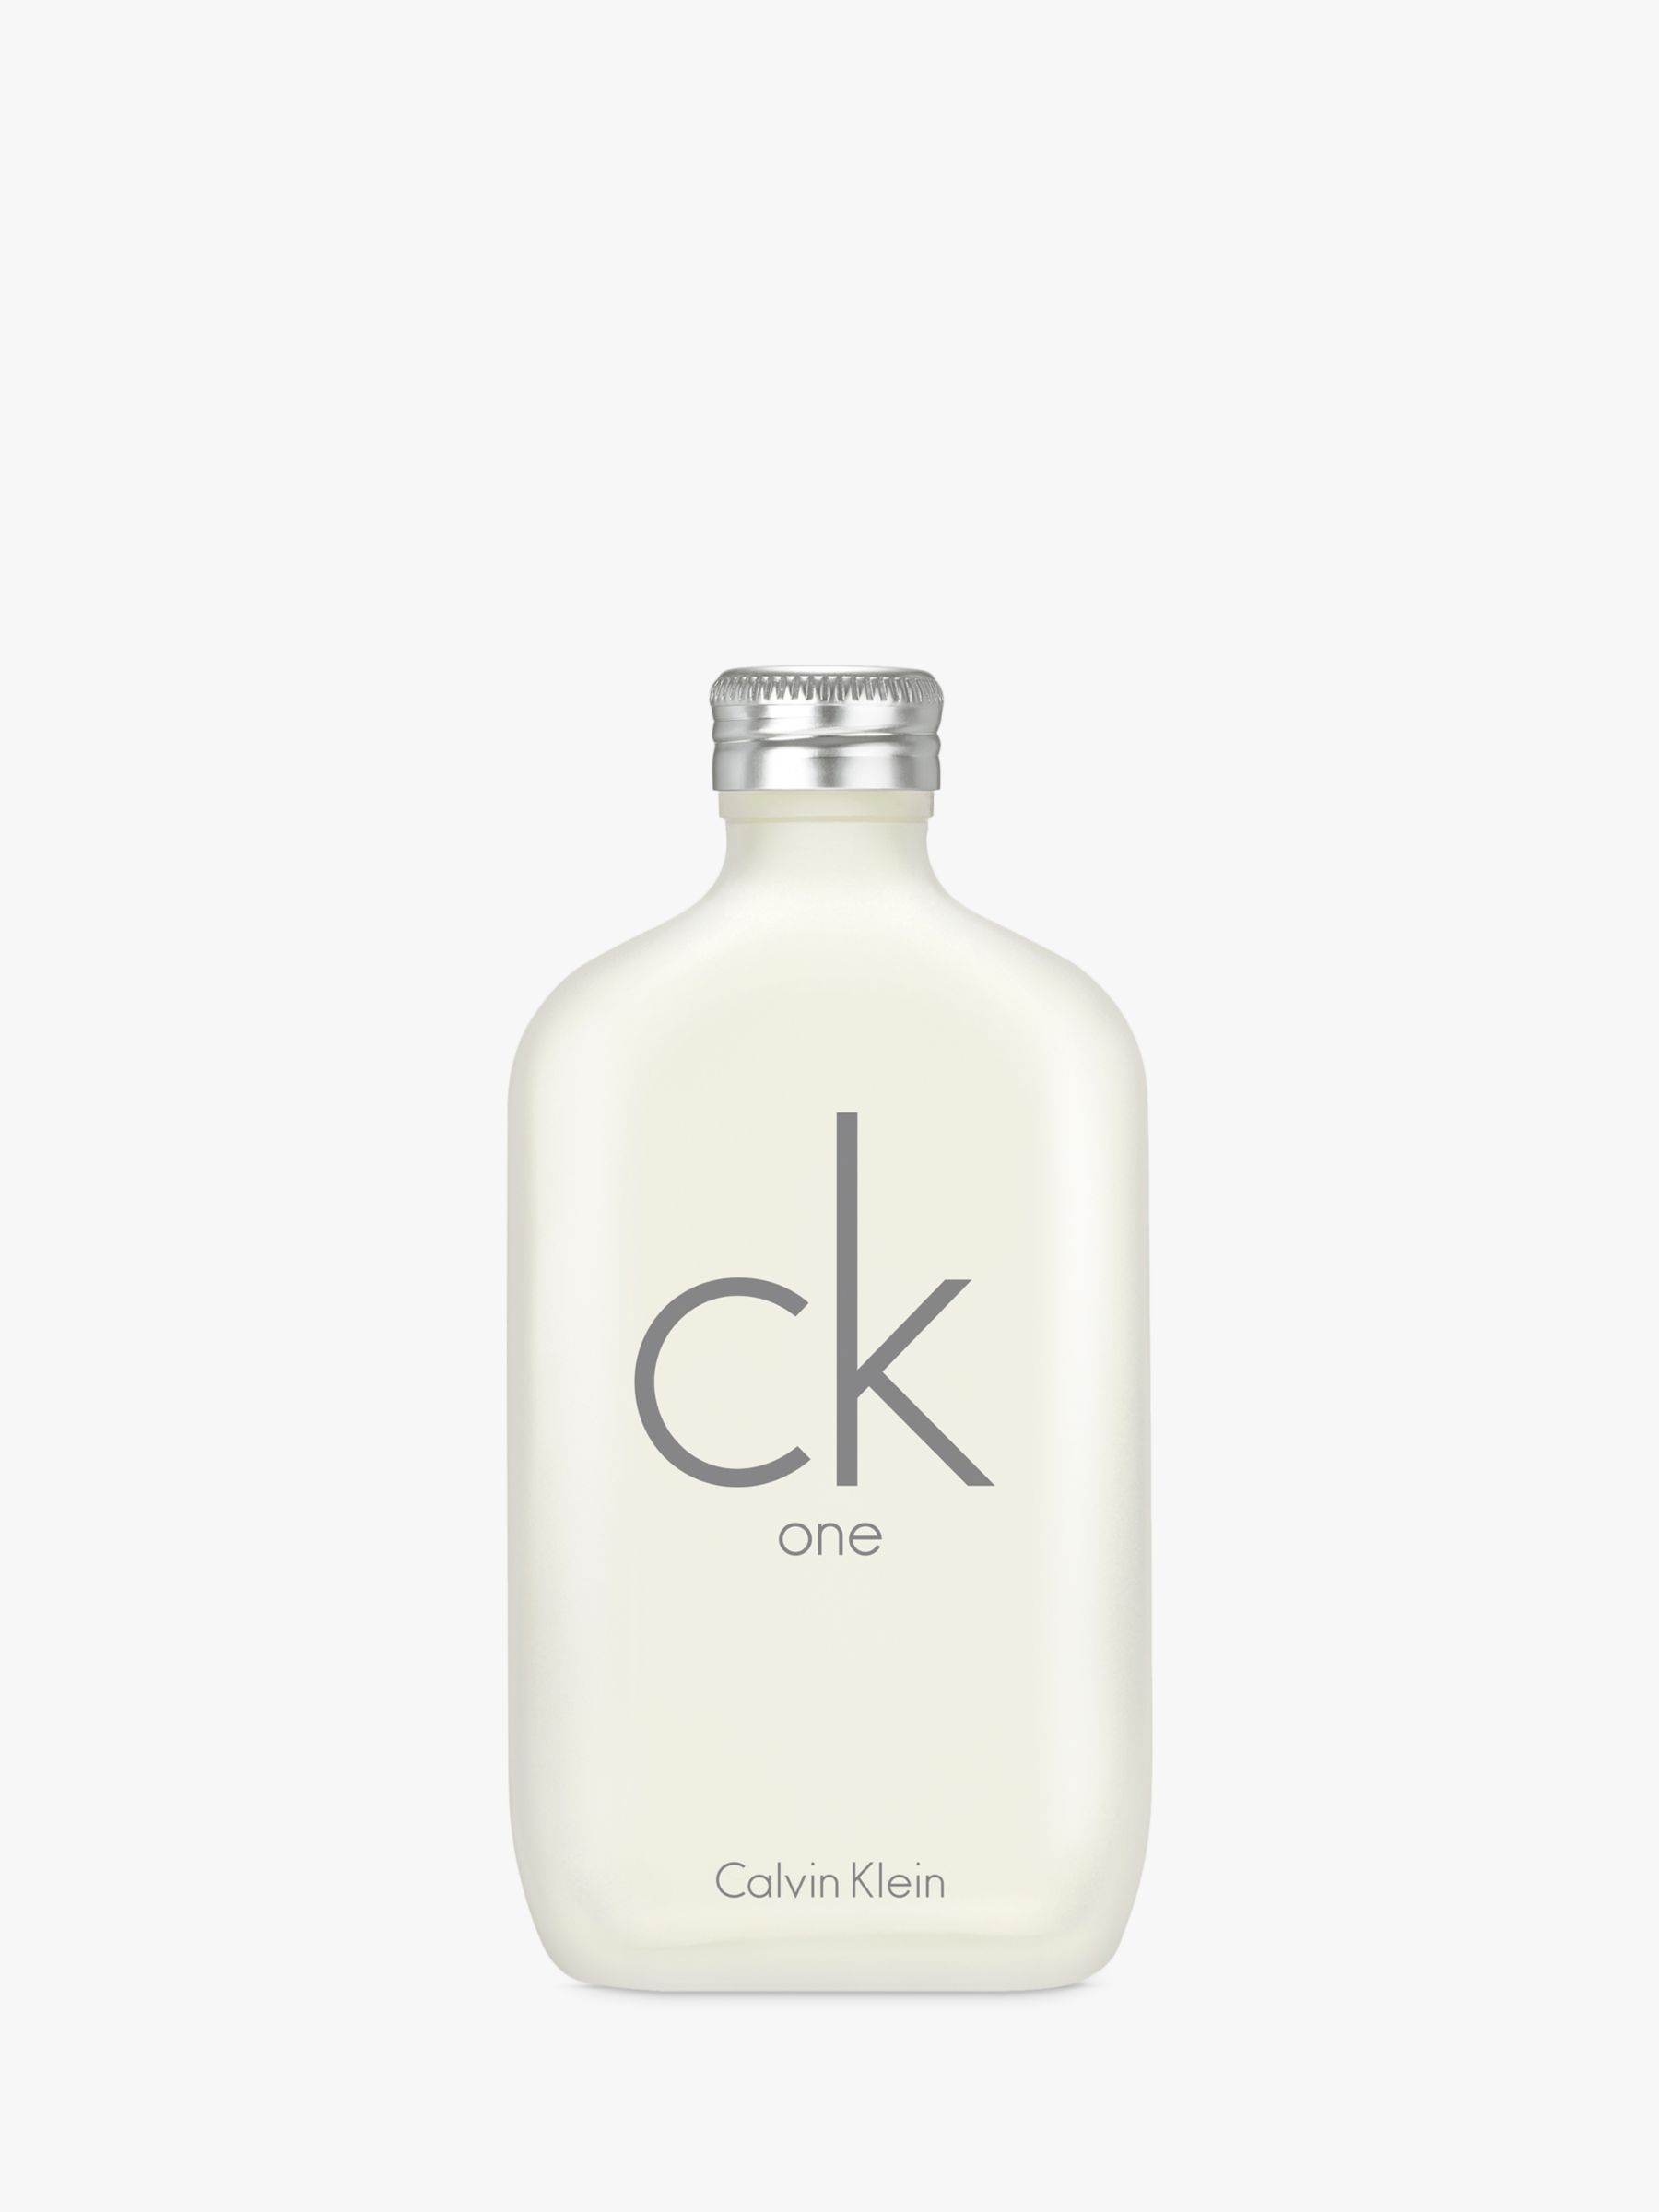 Calvin Klein CK One Eau de Toilette, 200ml